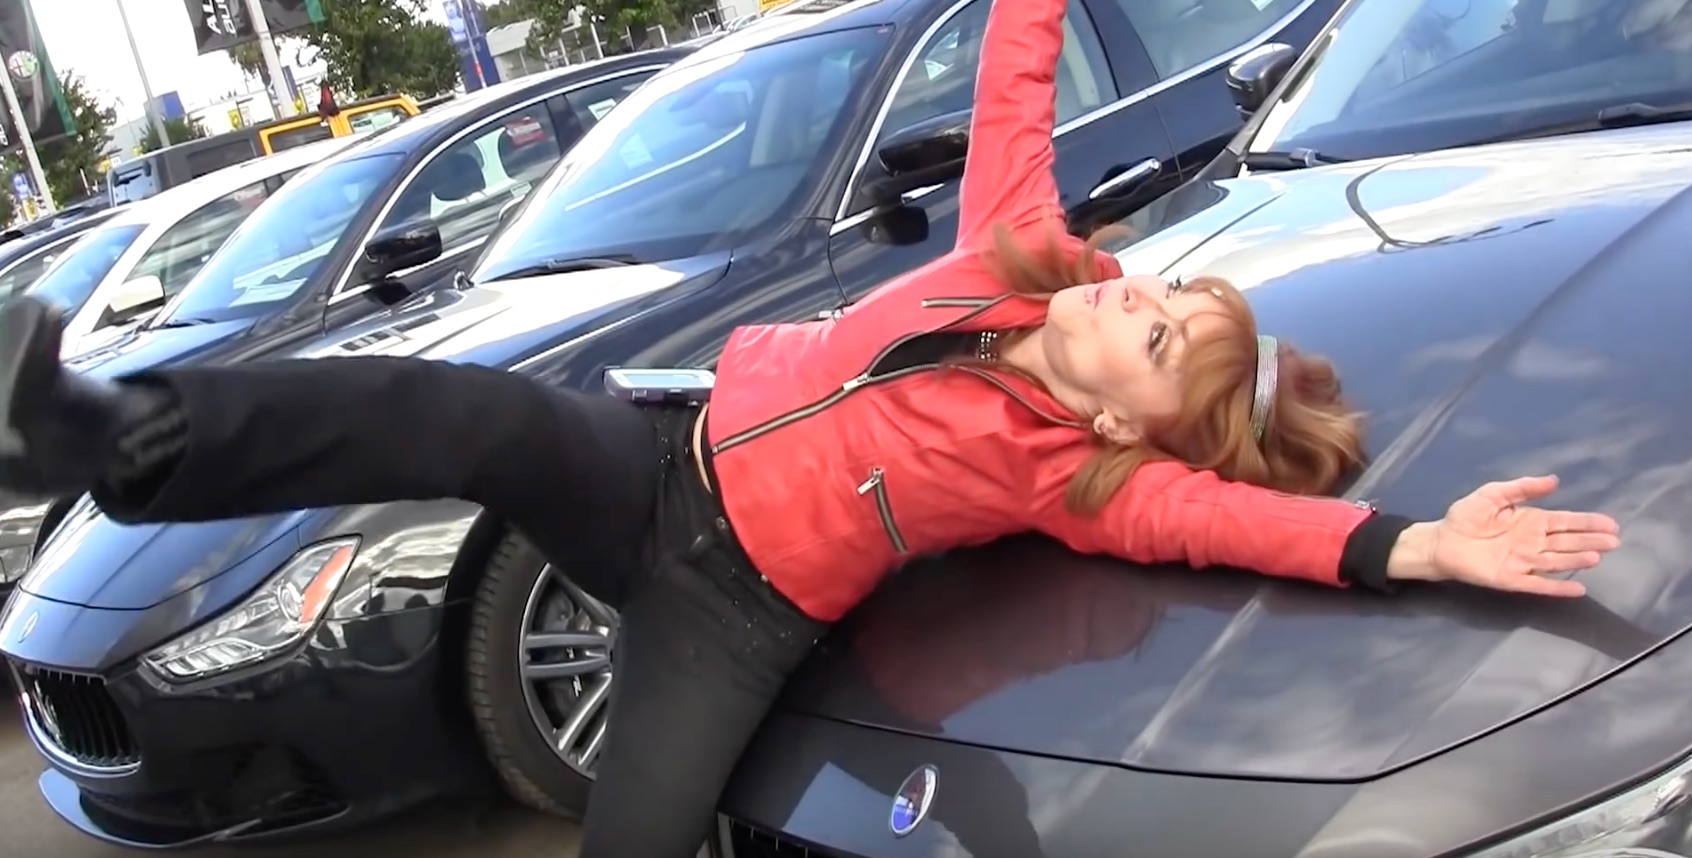 Comic Judy Tenuta test driving a Maserati for a segment of "The World Accordion to Judy."